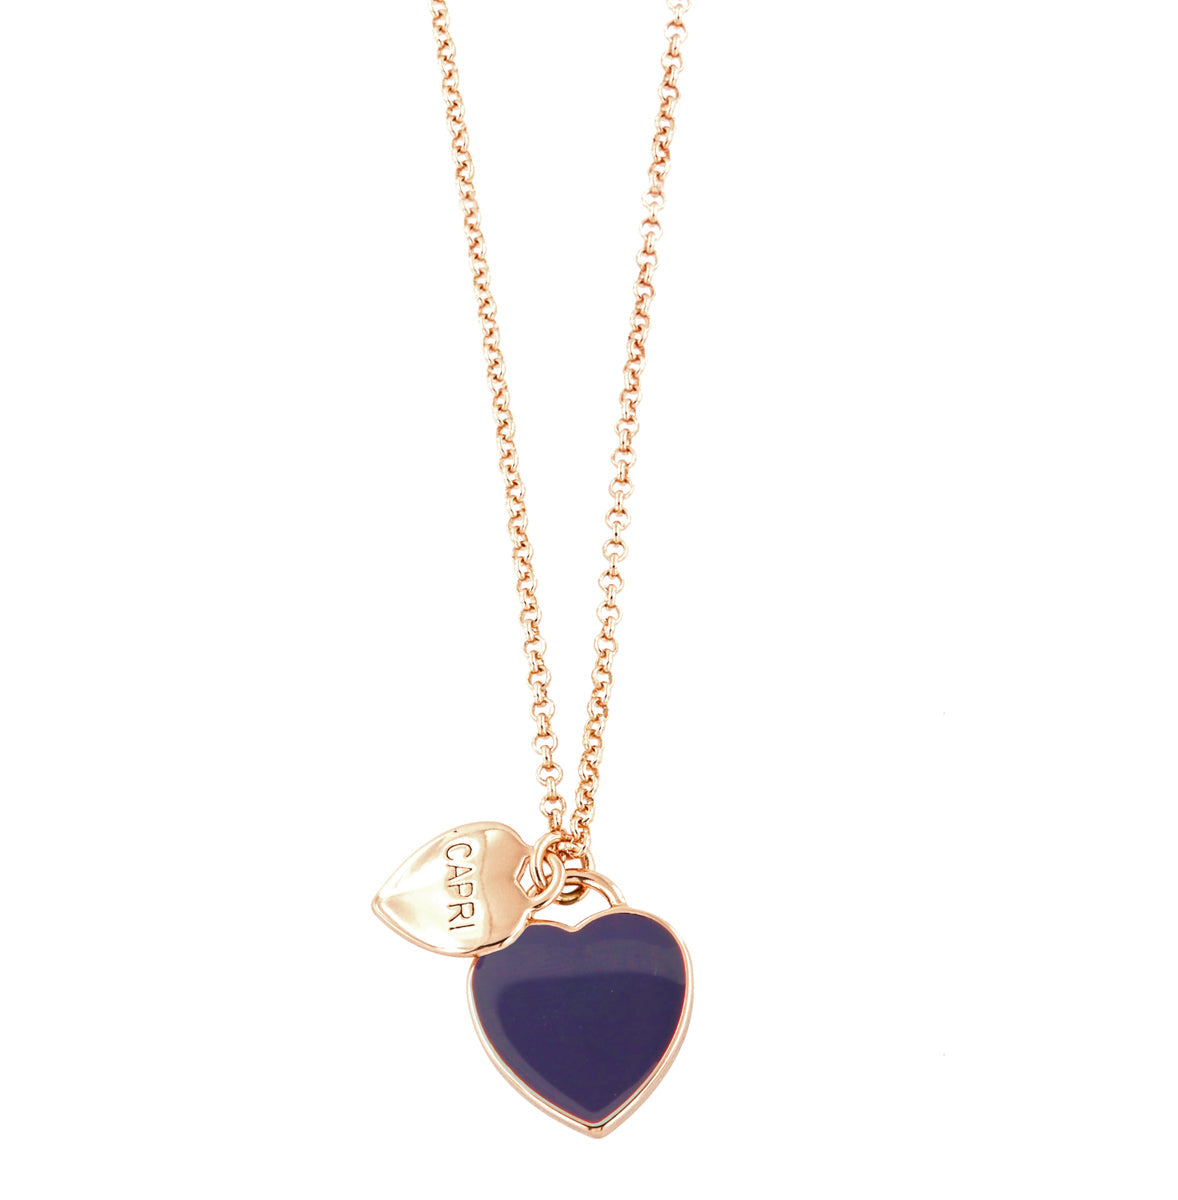 Metal necklace with heart pendant in purple enamel